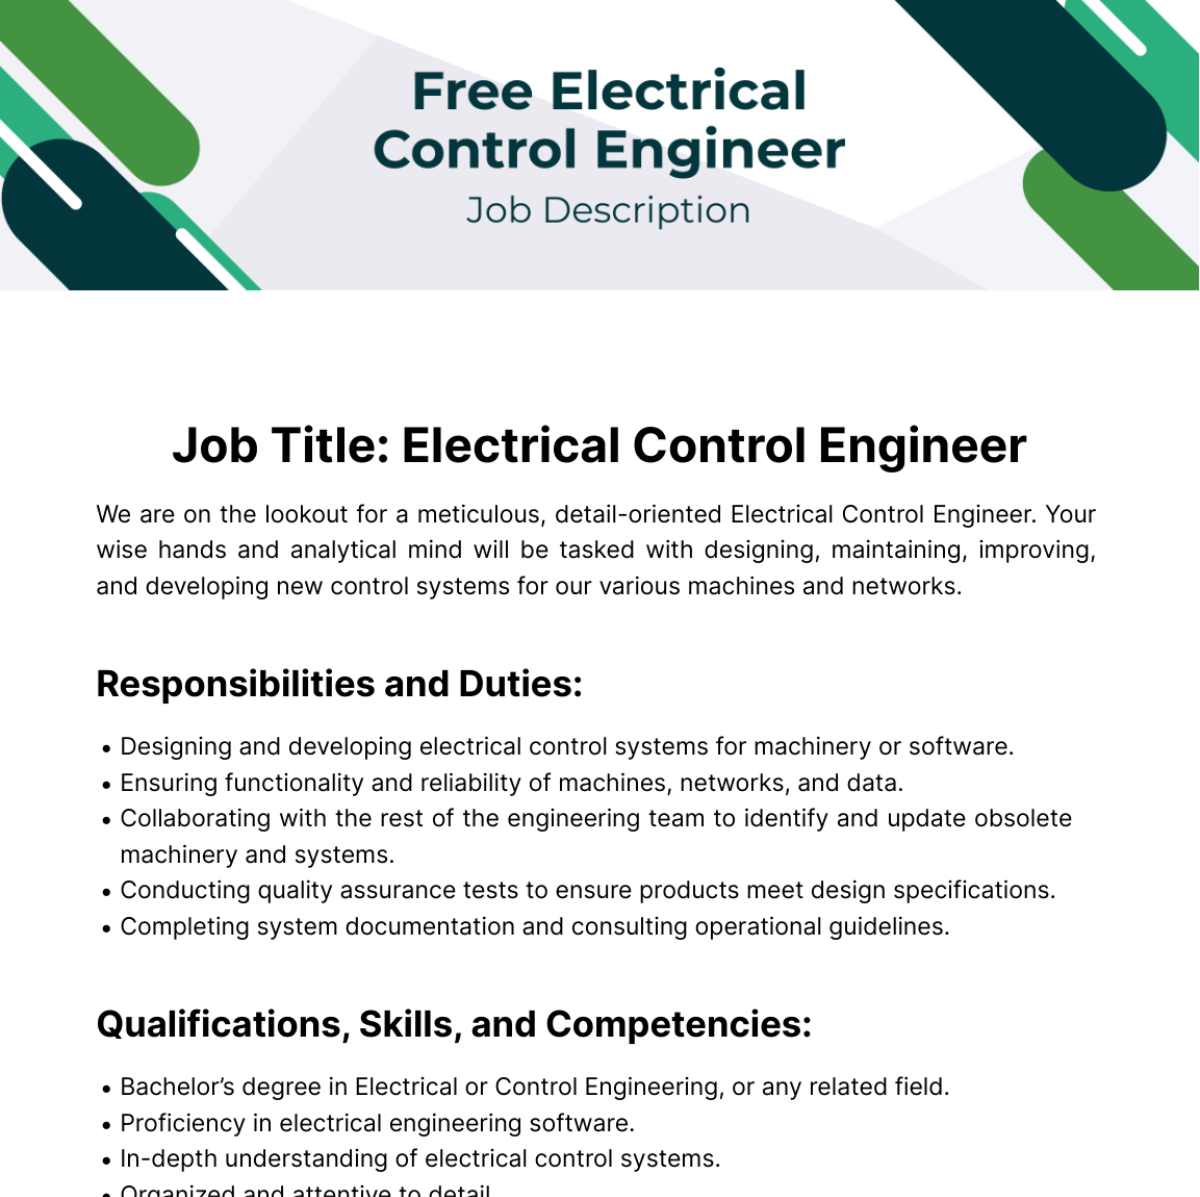 Free Electrical Control Engineer Job Description Template